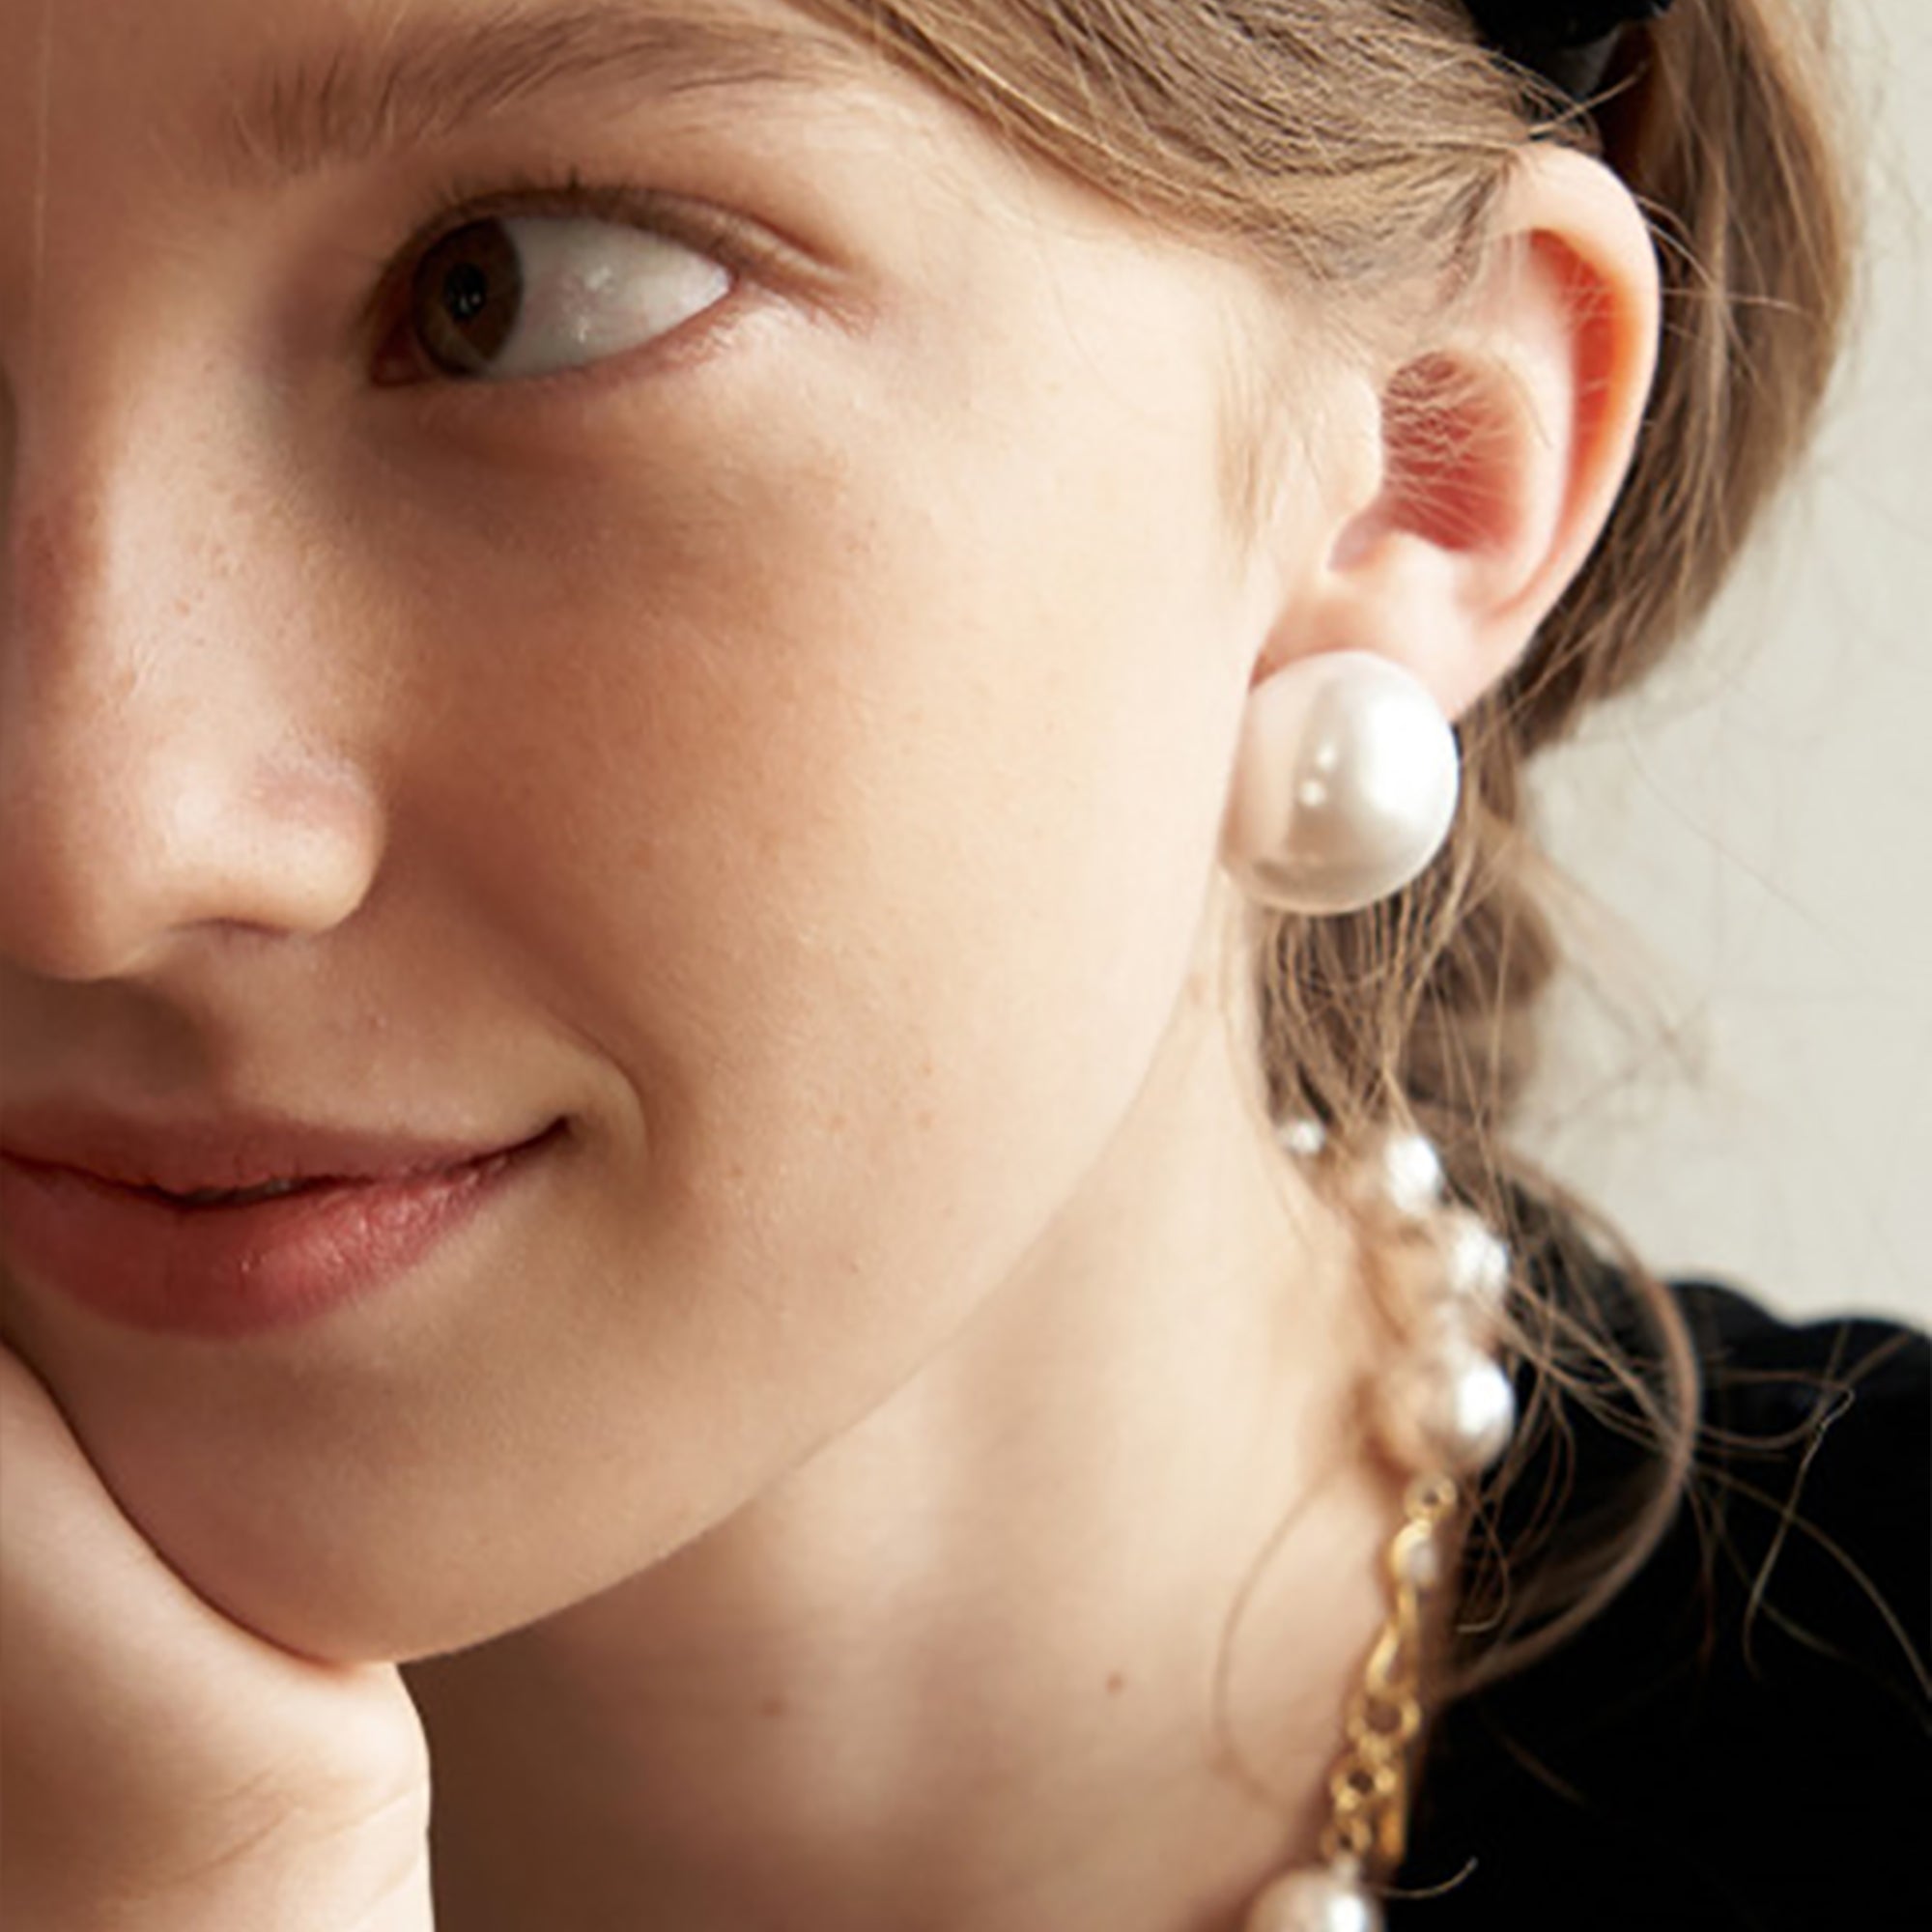 Chunky Pearl Stud Earrings Gift wedding influencer styling KOL / Youtuber / Celebrity / Fashion Icon